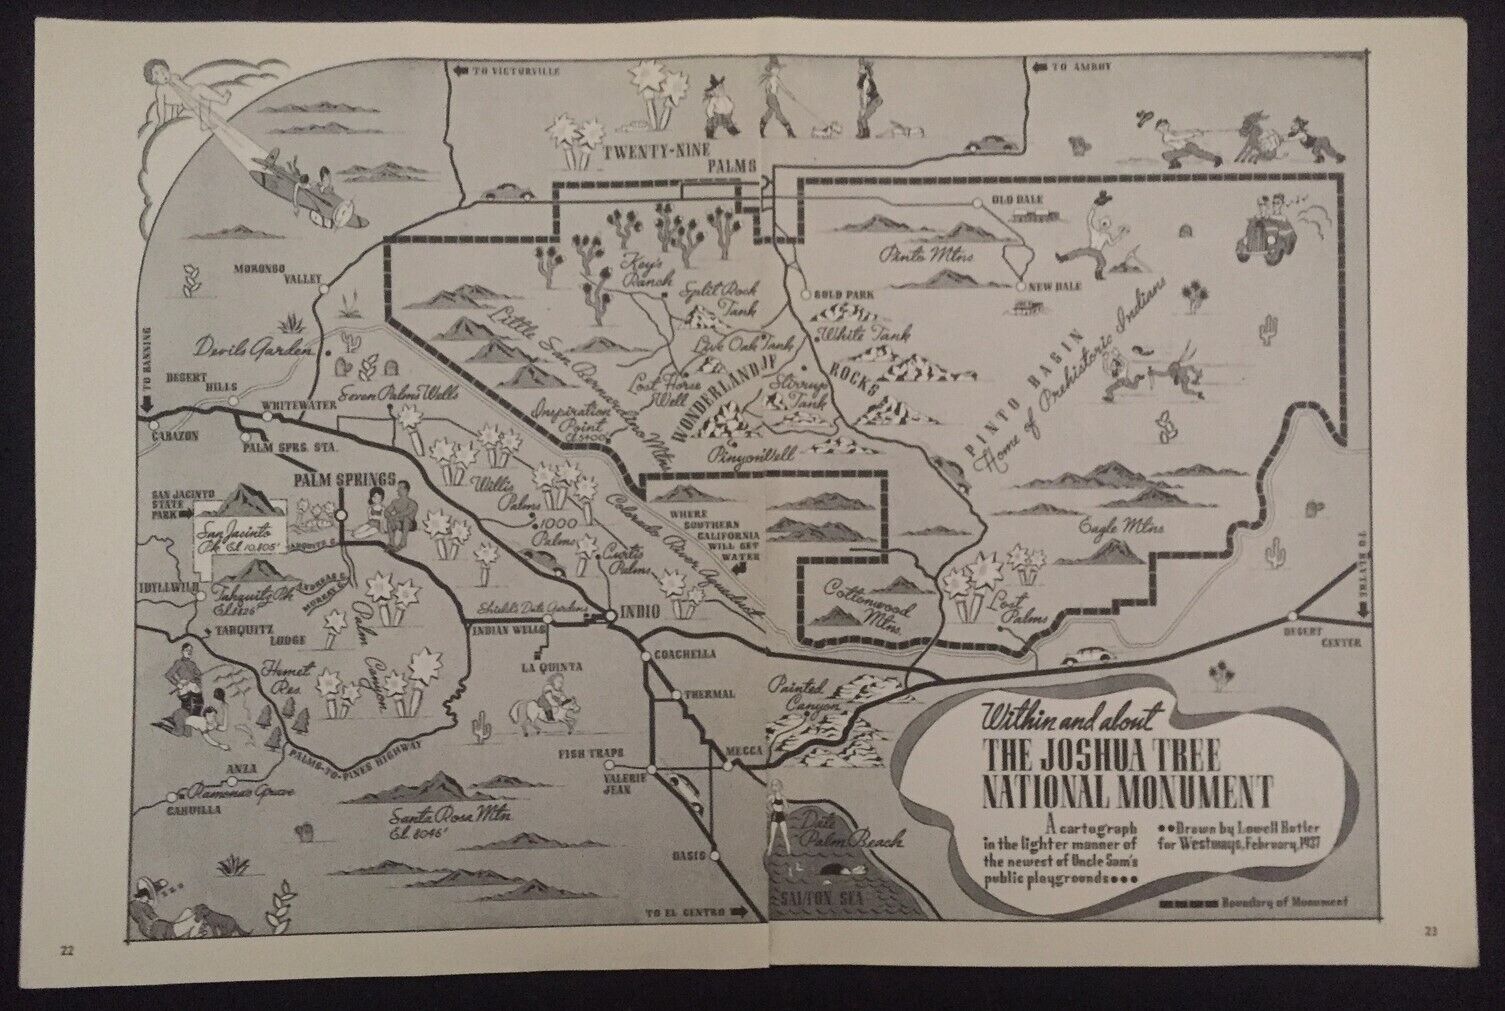 Original 1937 Pictorial Map of Joshua Tree National Monument